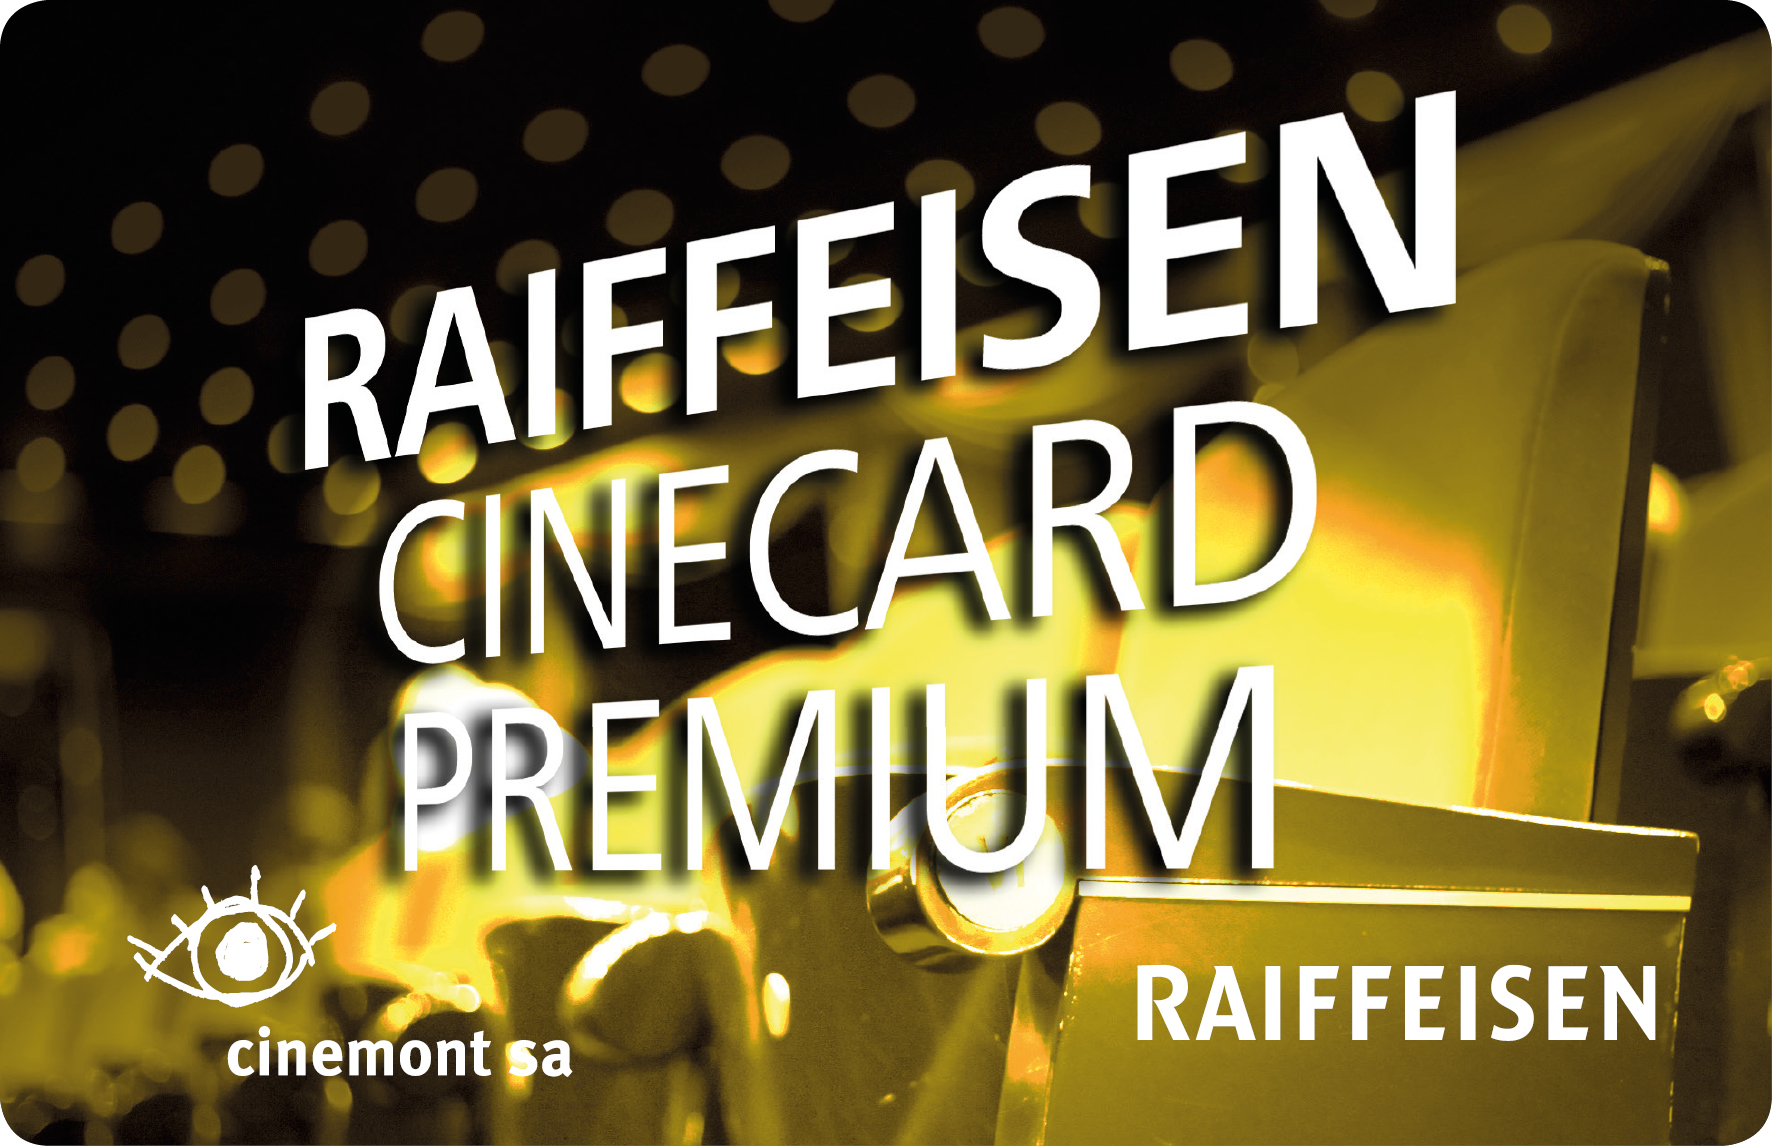 Raiffeisen Cinecard Premium